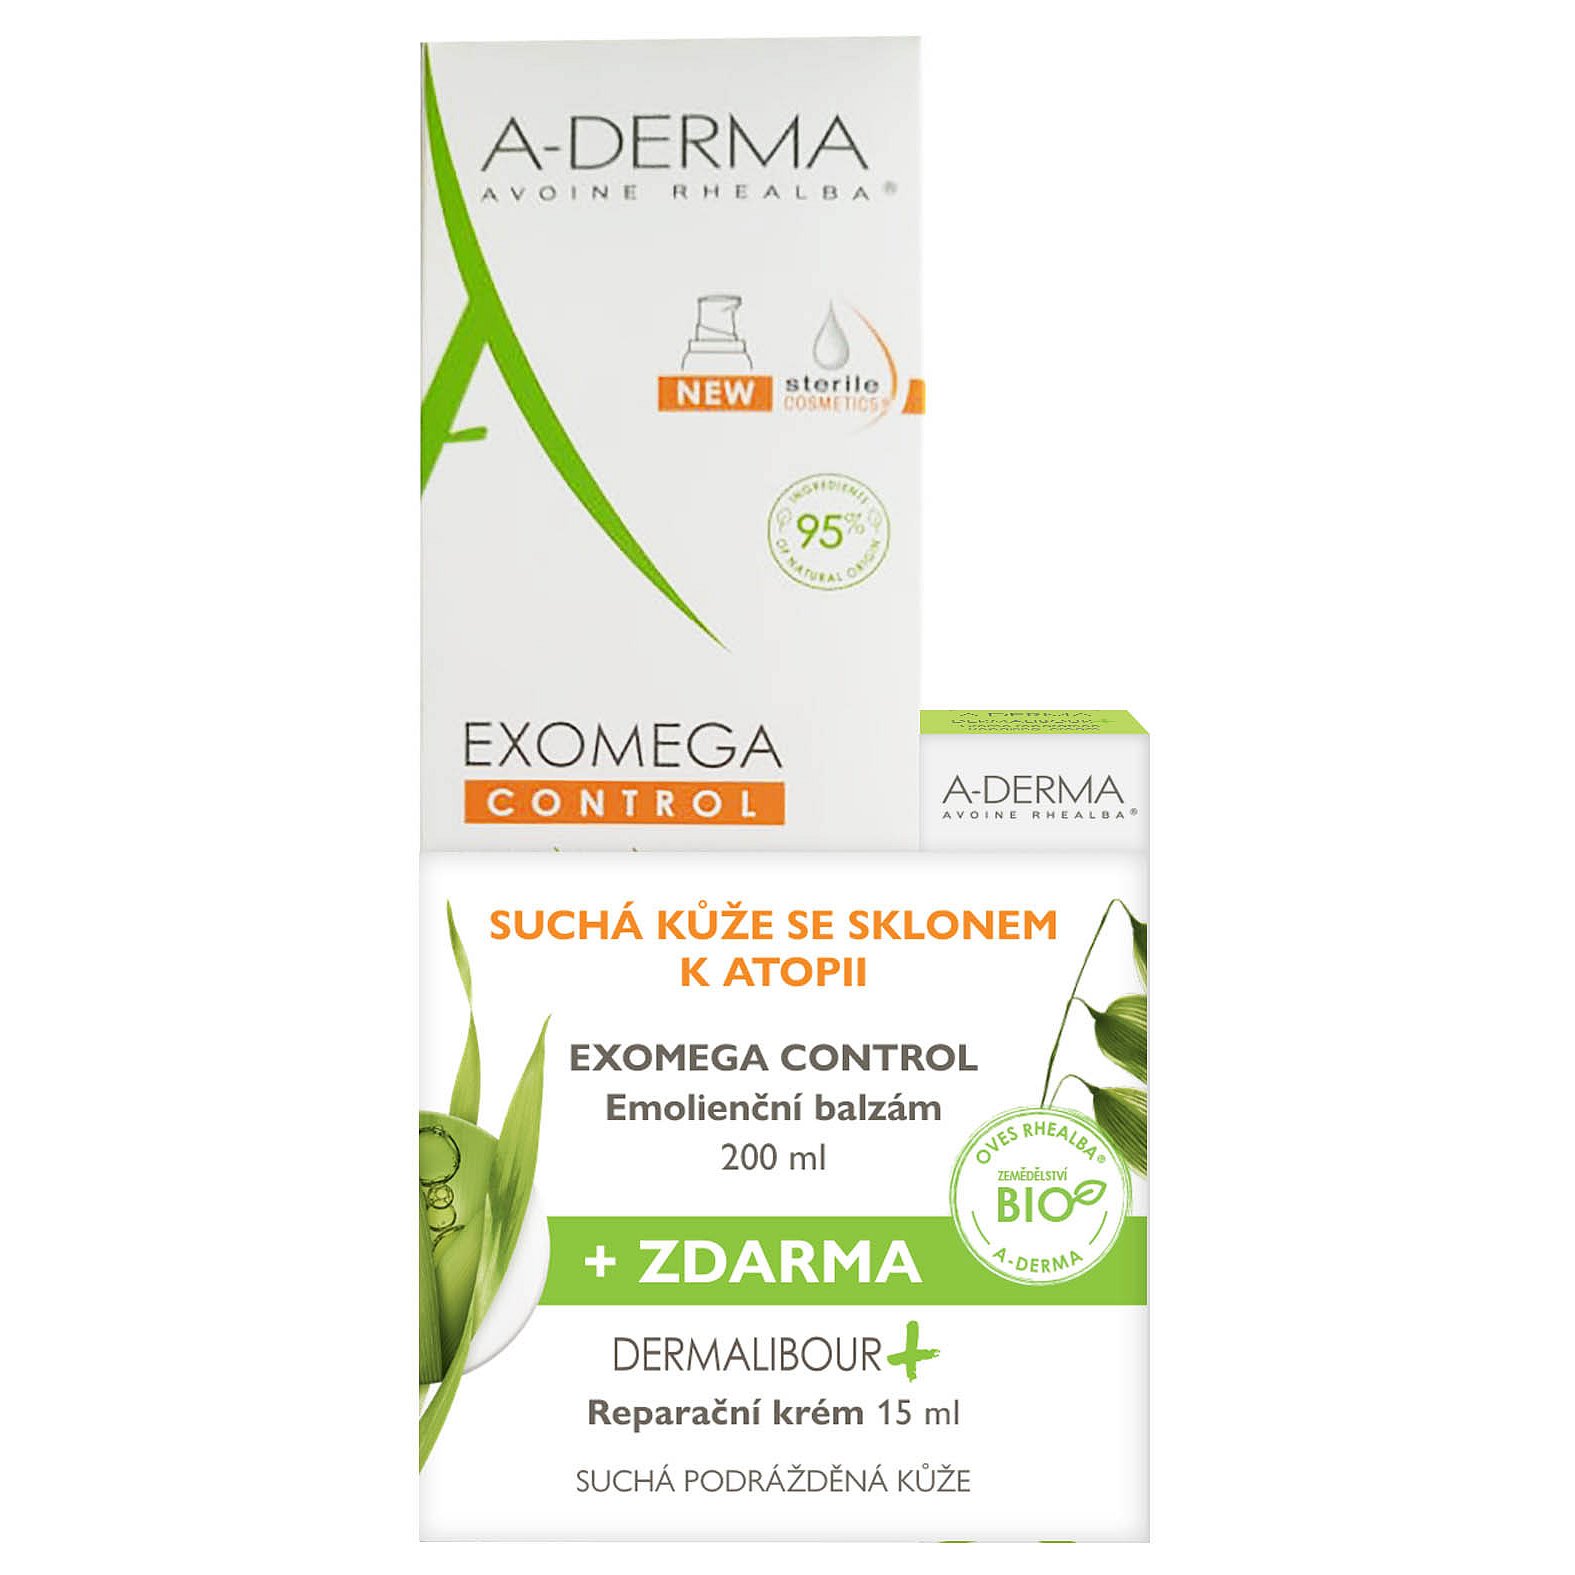 A-Derma Exomega control baume emollient 200ml + Dermalibor reparační krém 15ml